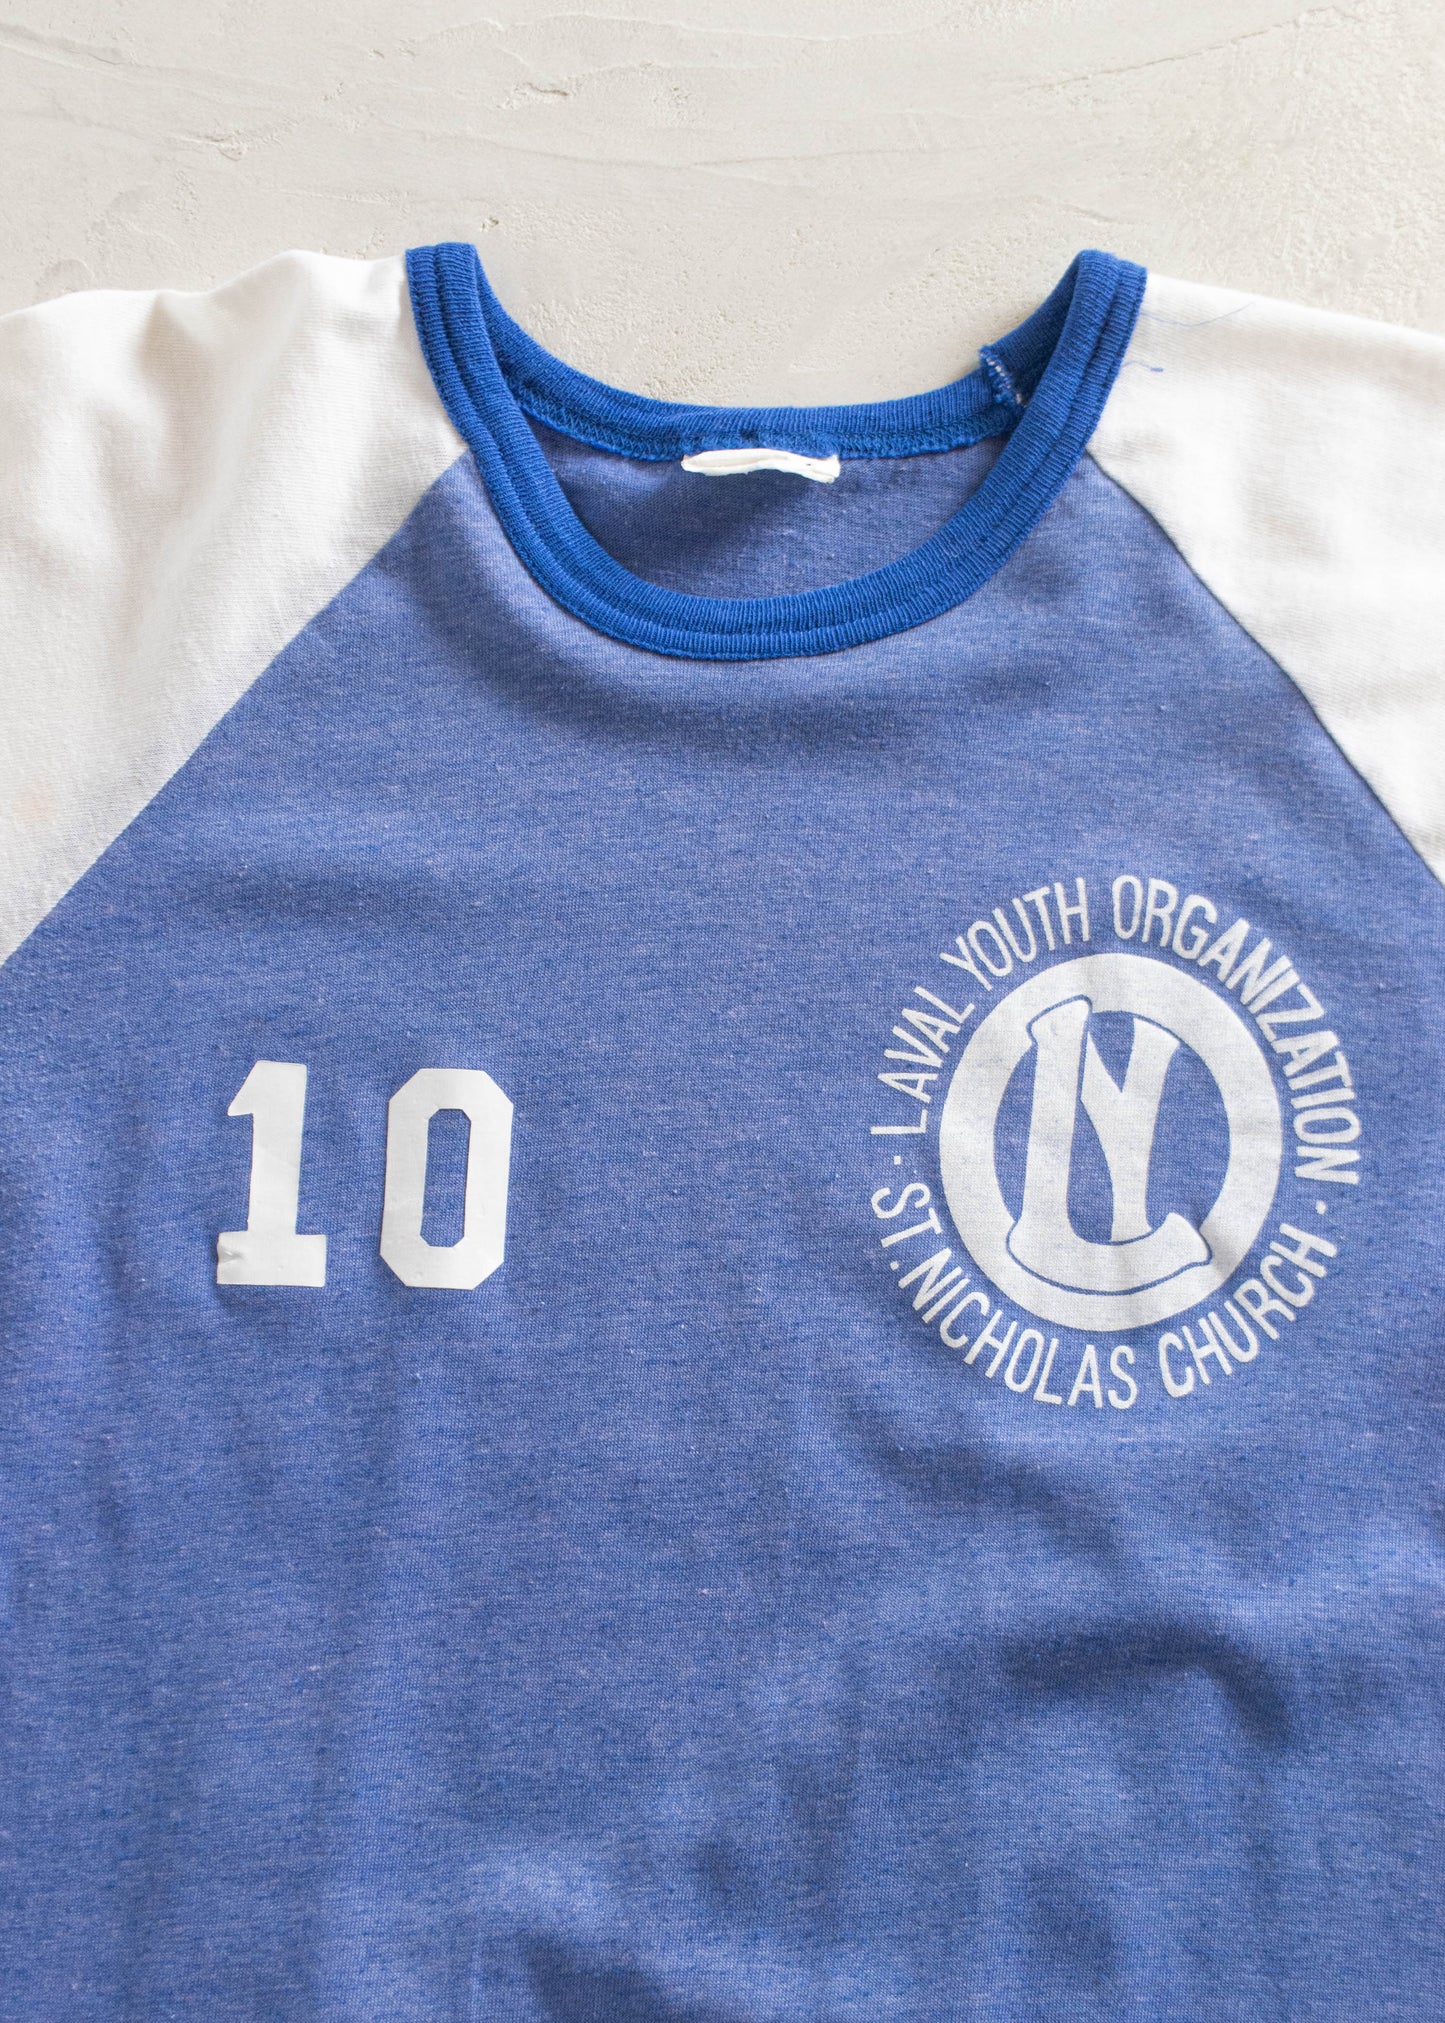 1980s Laval Youth Organization Baseball Raglan T-Shirt Size S/M